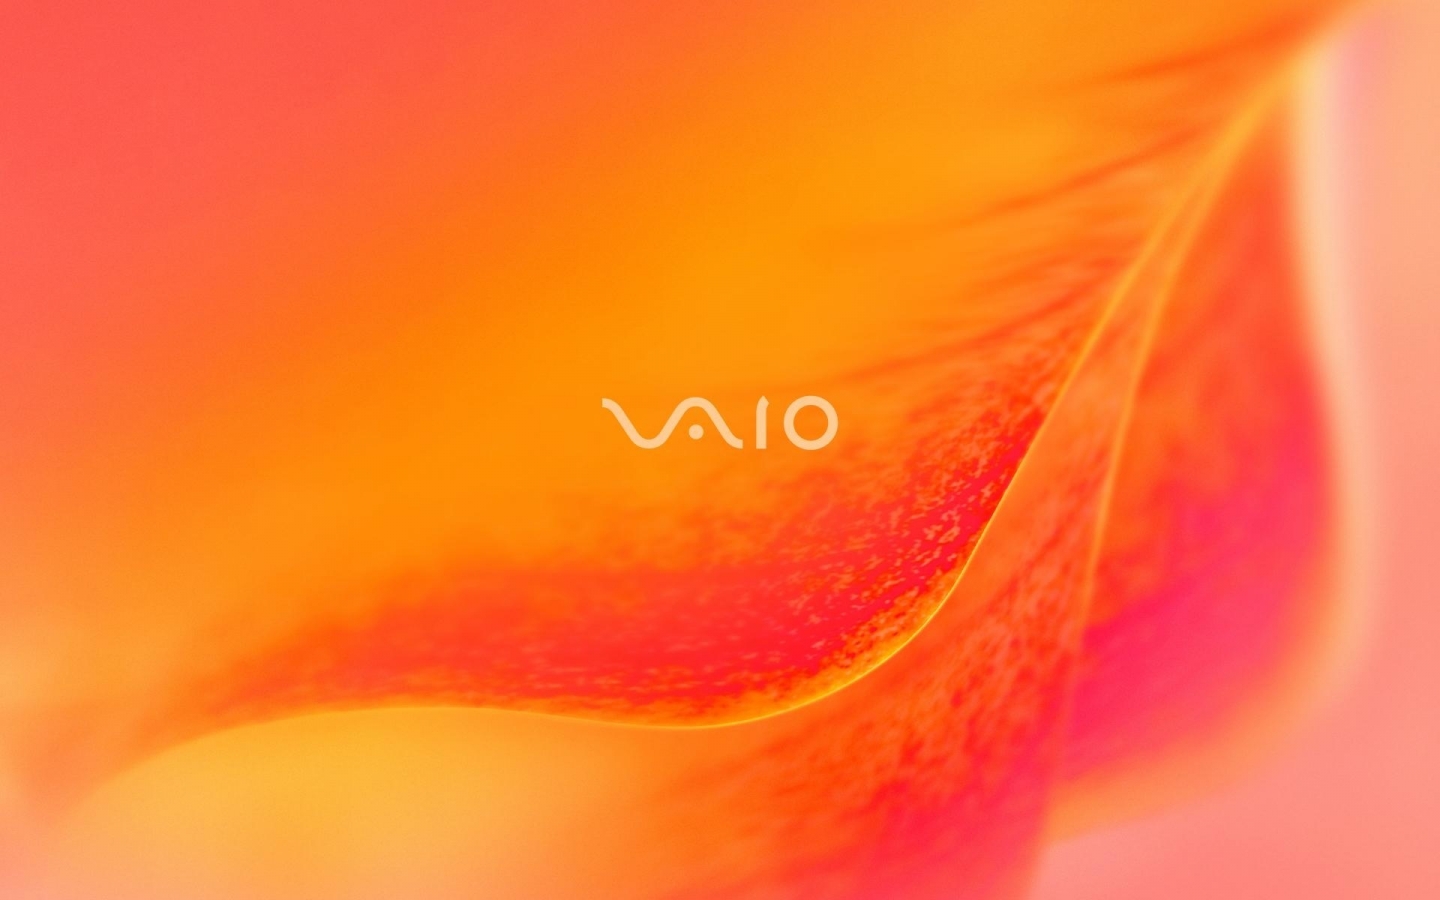 Sony Vaio Orange blossom for 1440 x 900 widescreen resolution